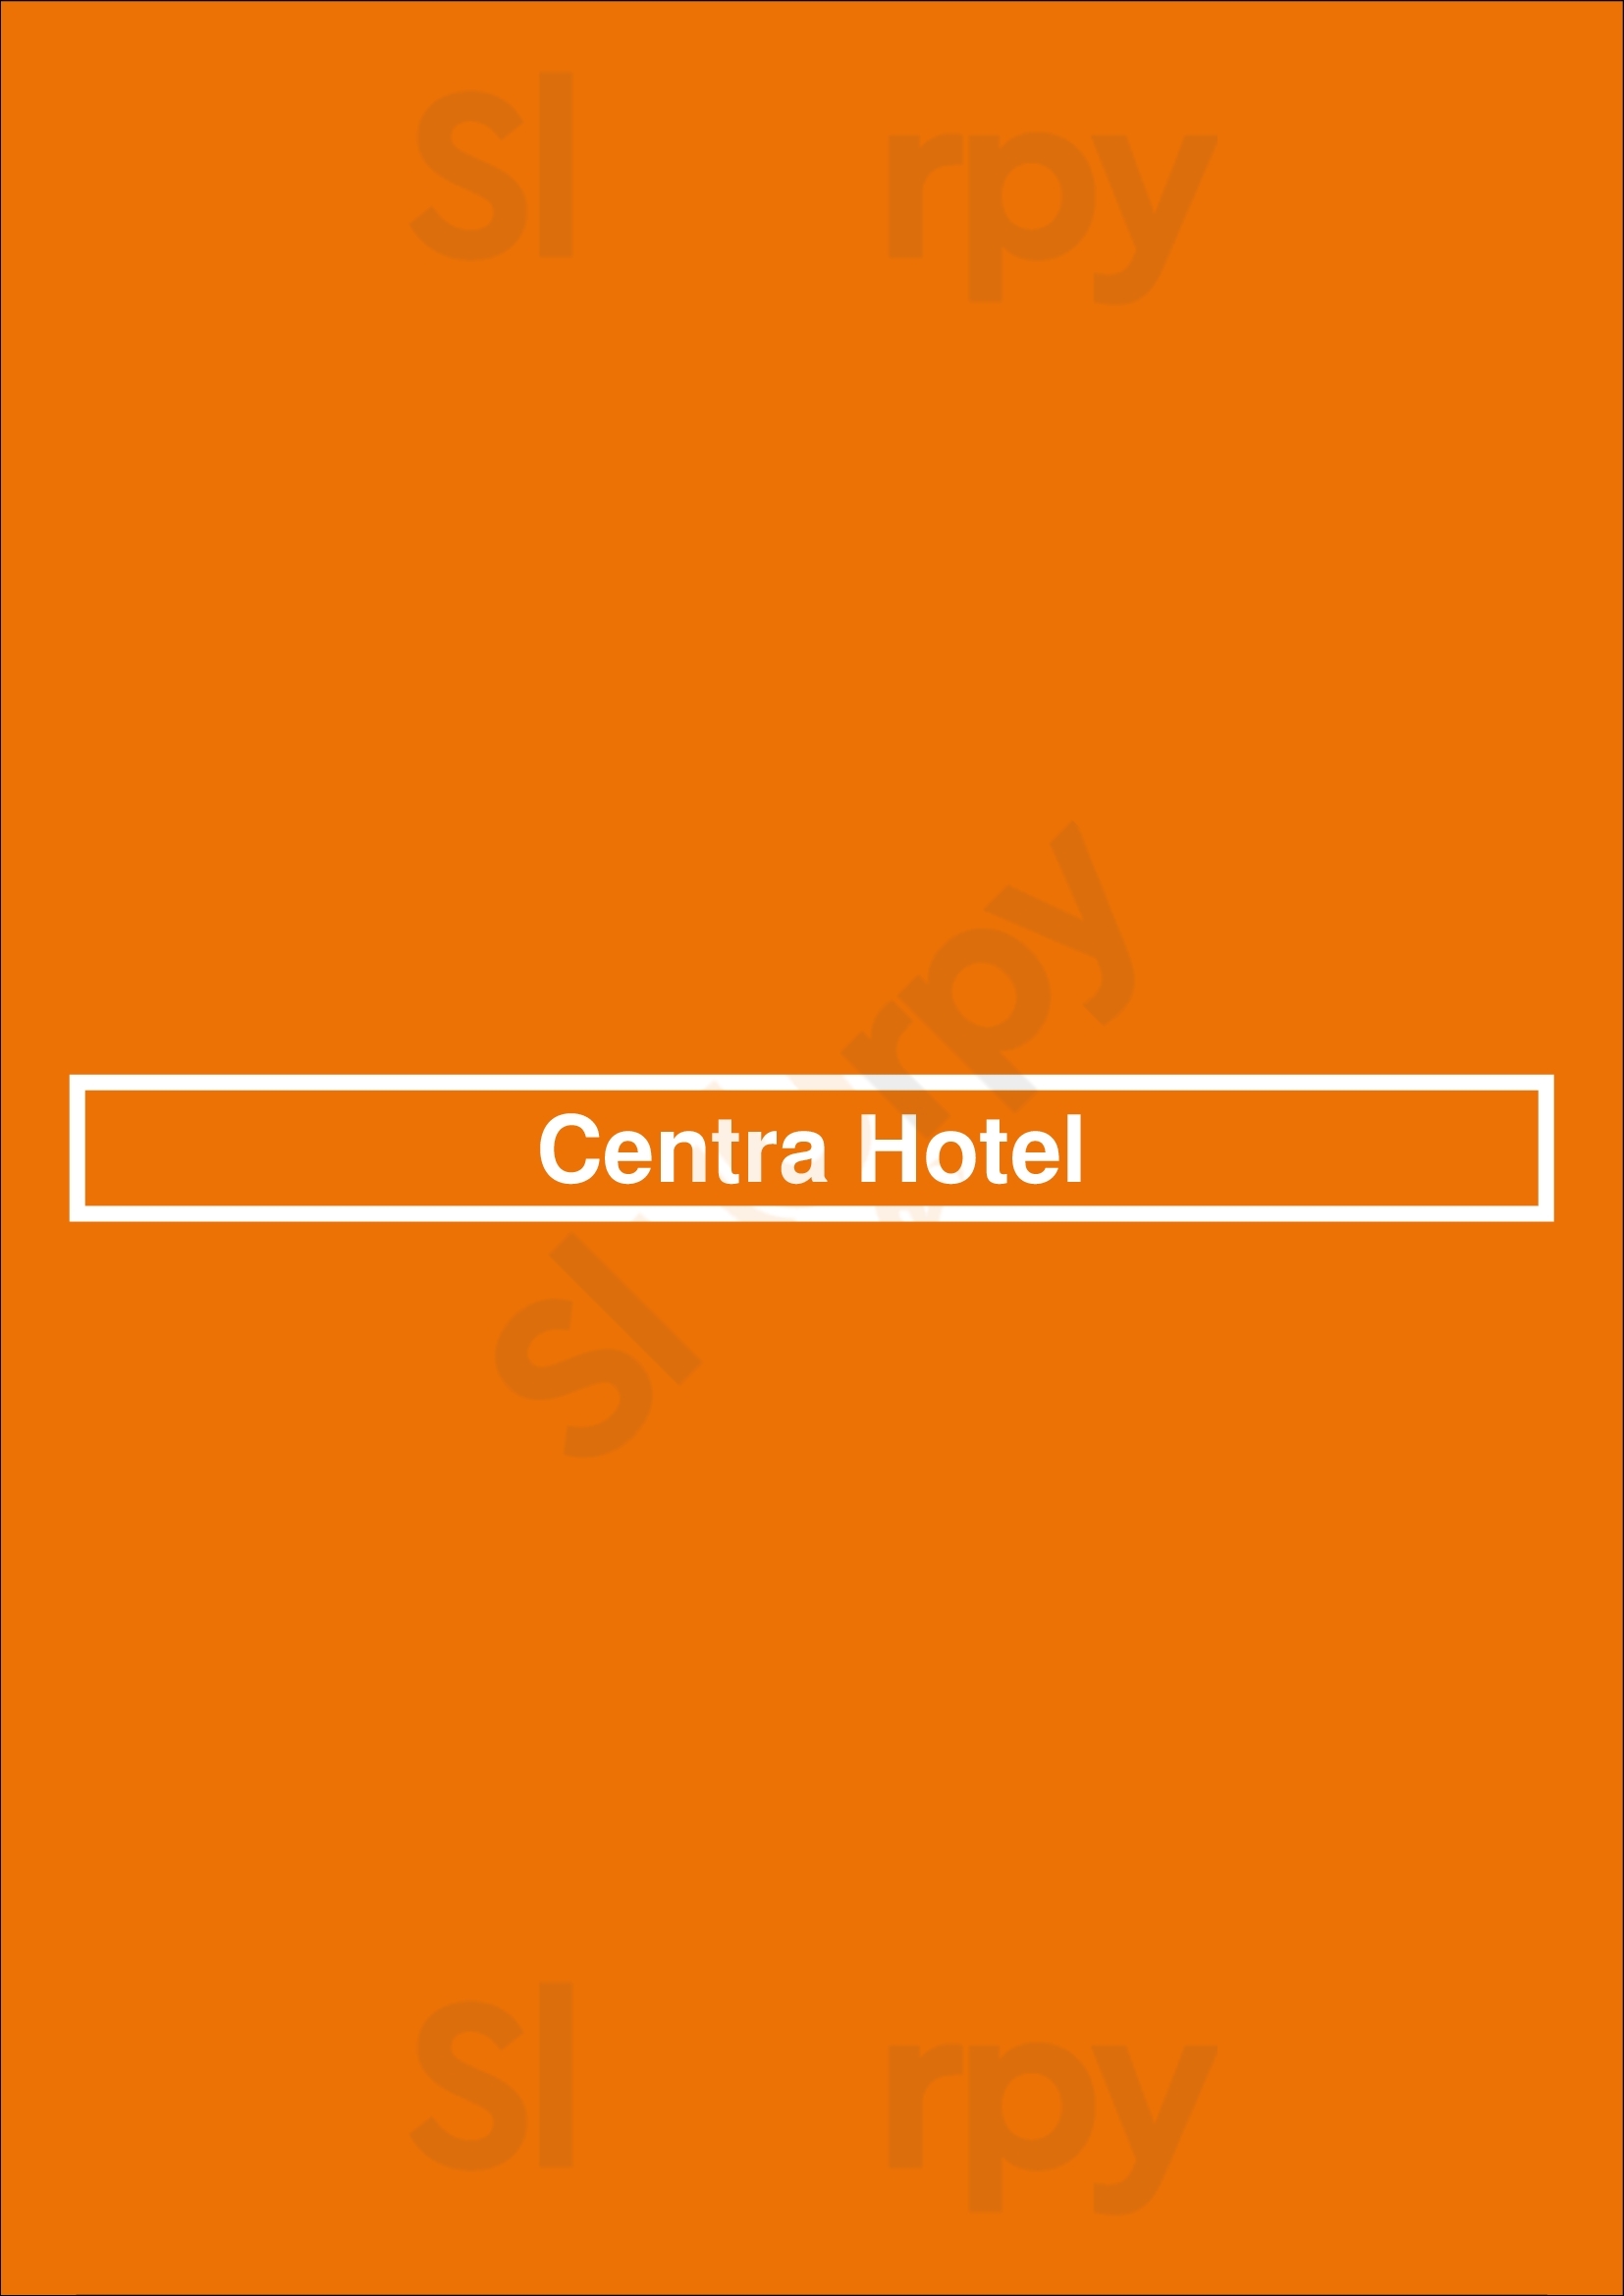 Centra Hotel Geelong Menu - 1